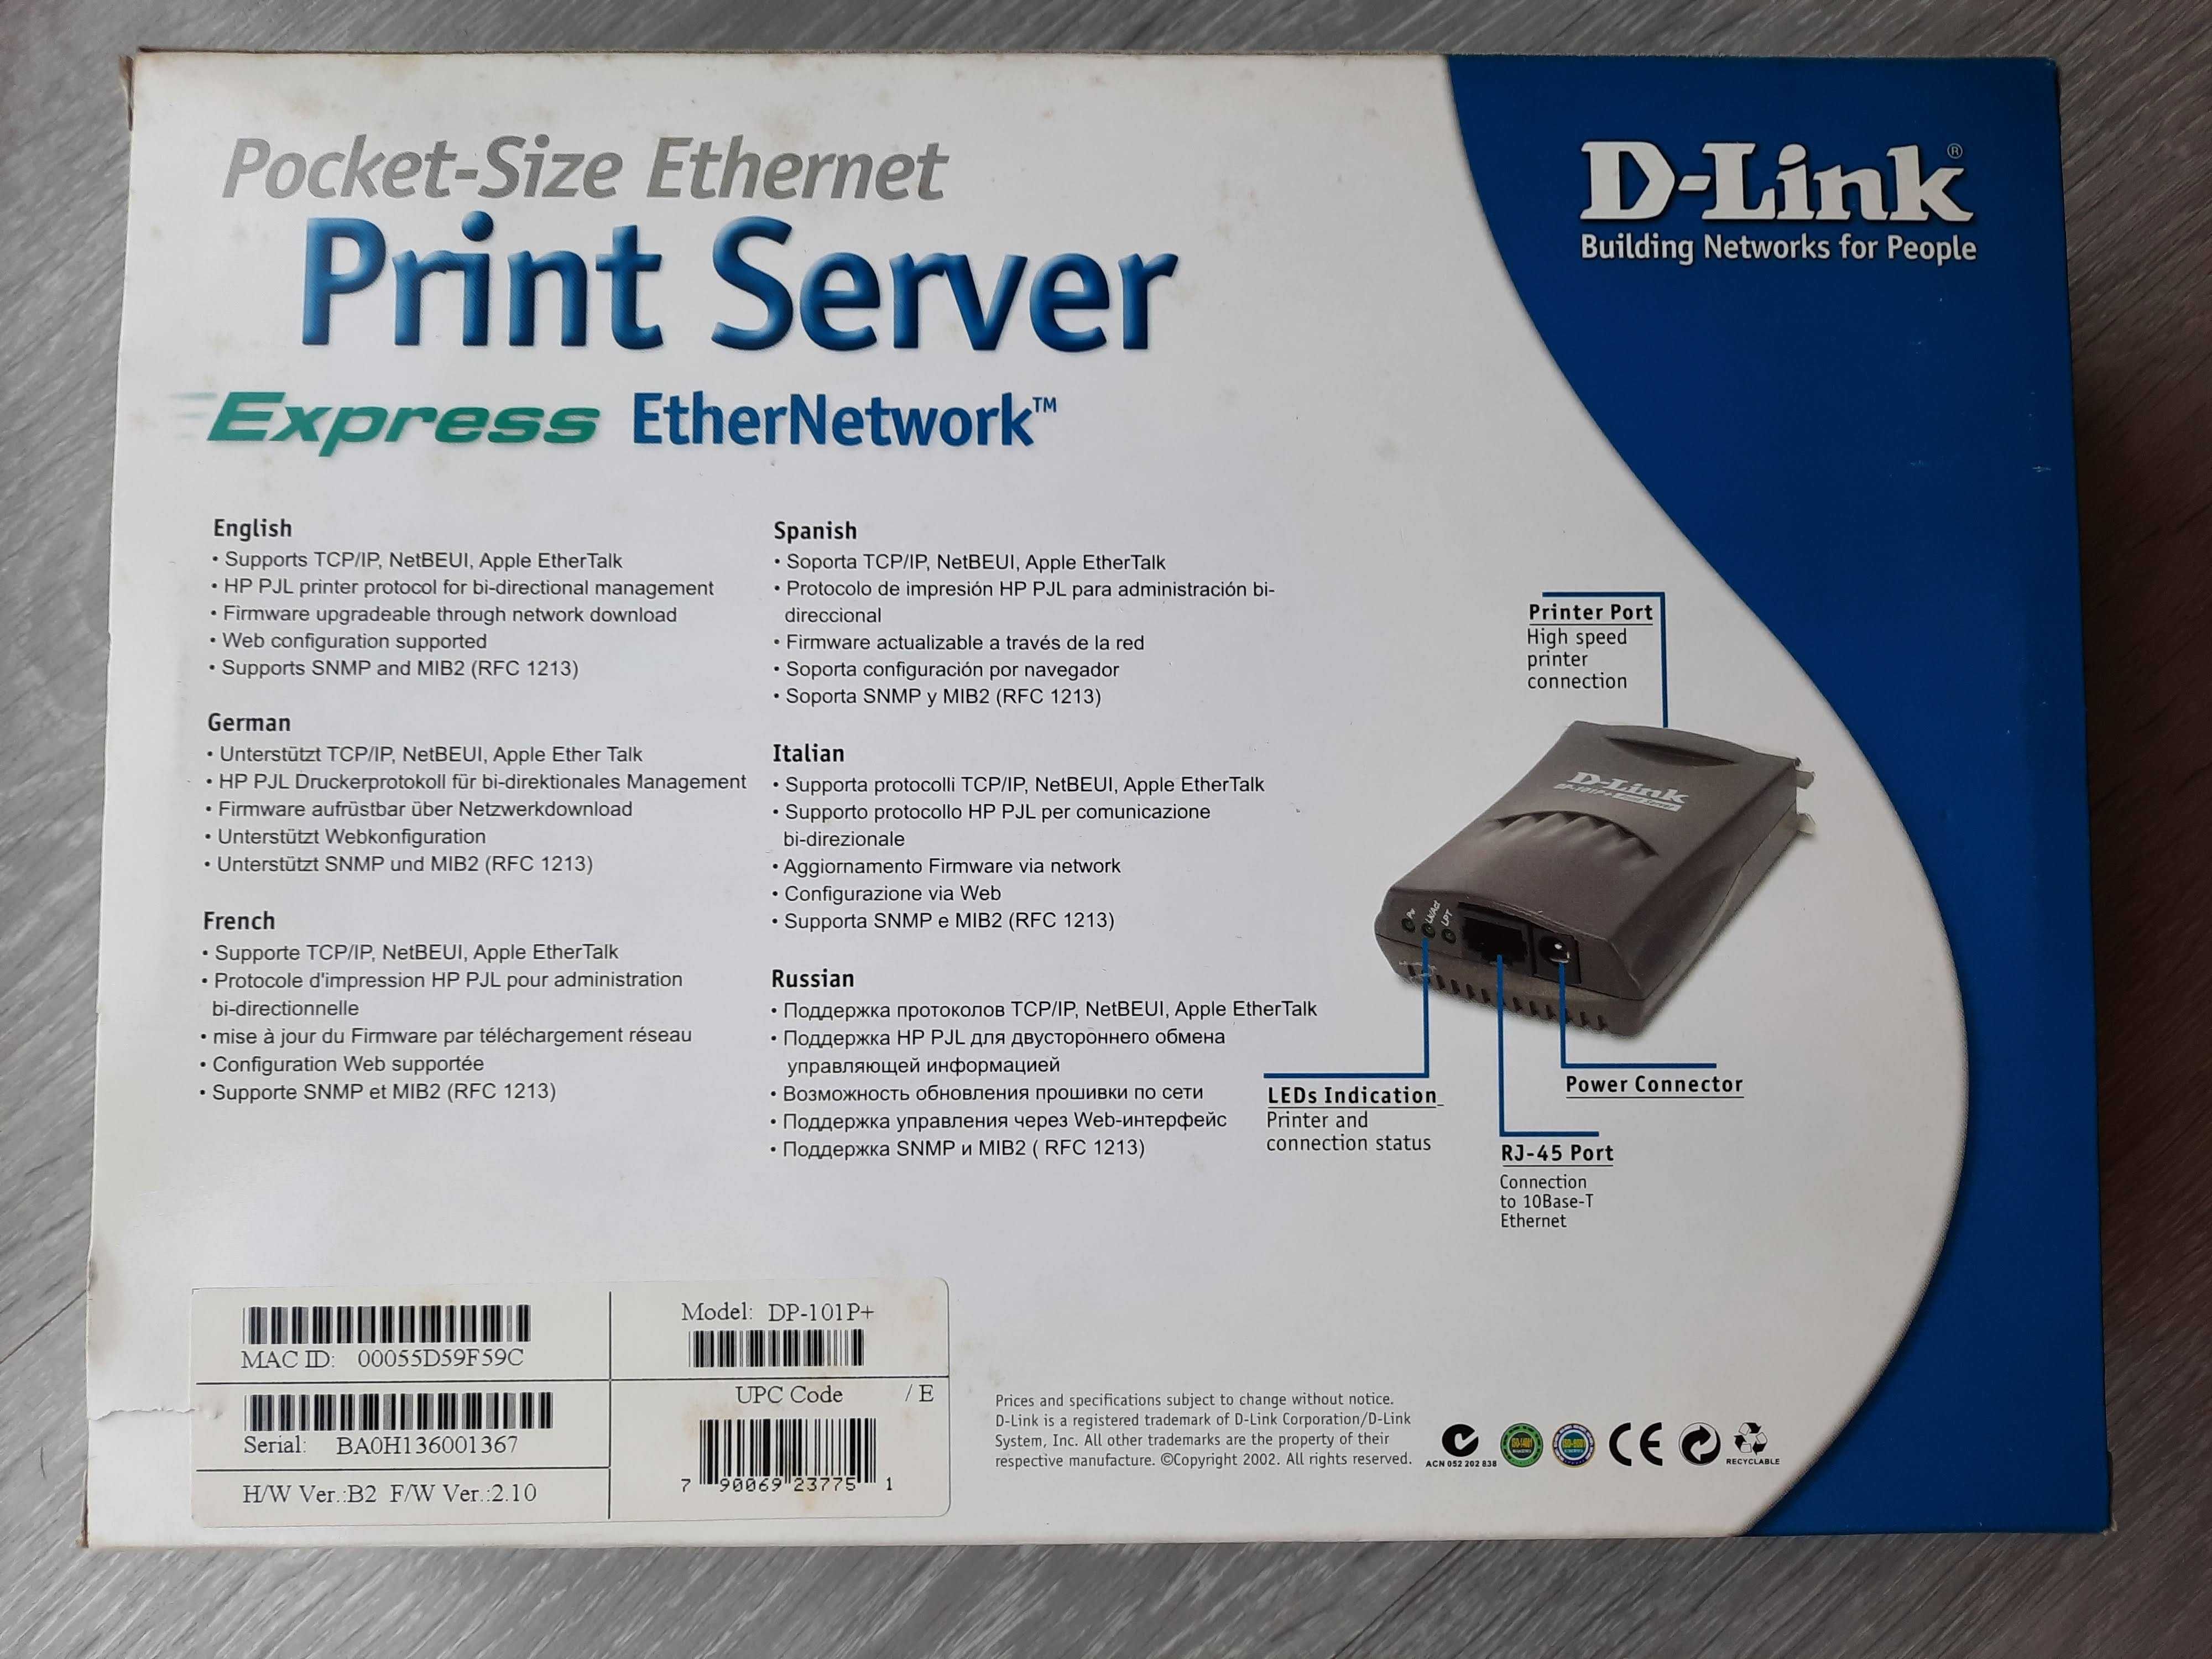 Print Server D-Link DP-101P+ (RJ-45/Porta Paralela, Centronics) (Novo)